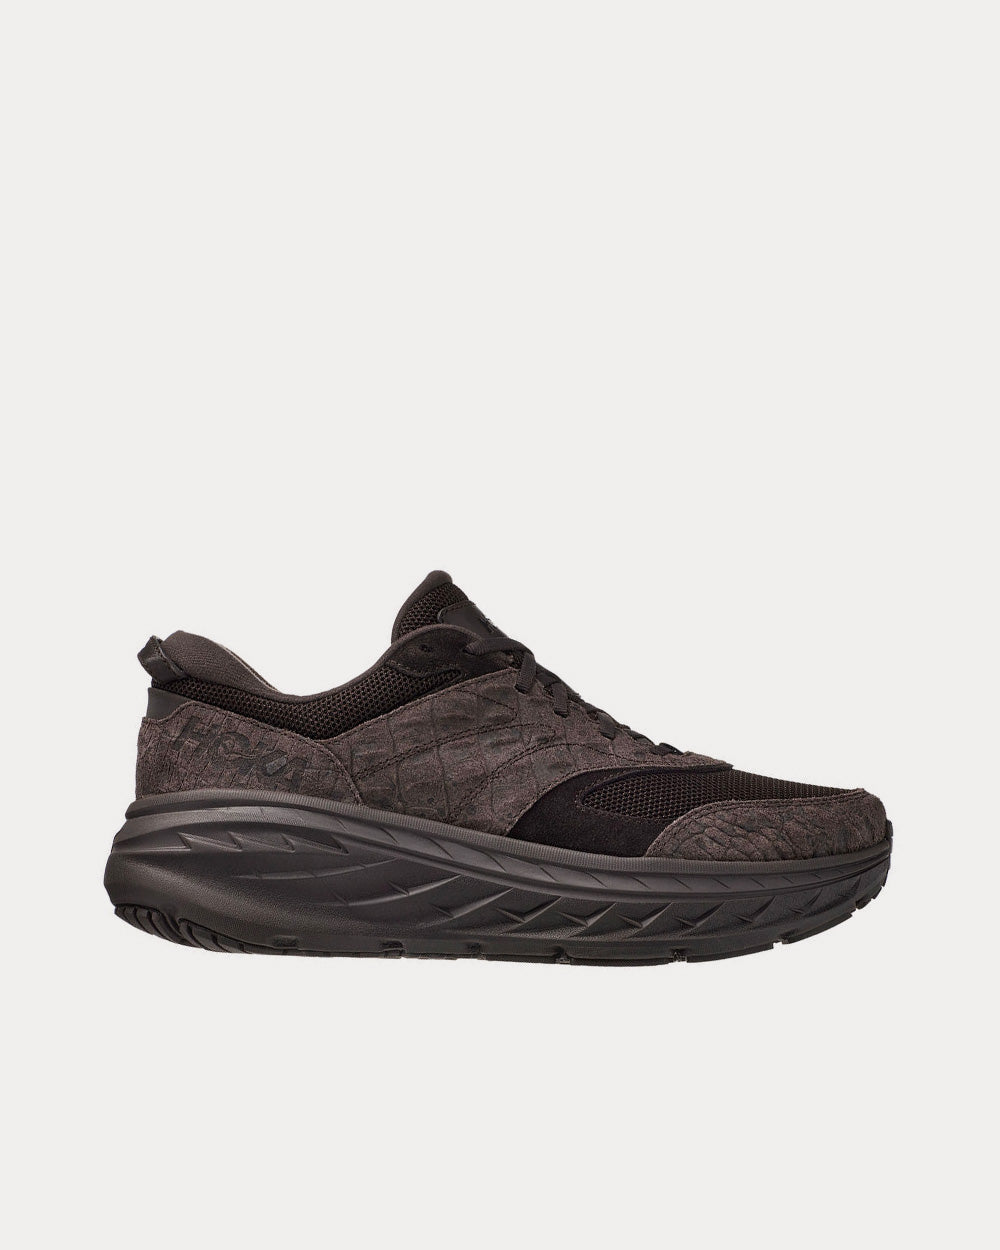 Hoka x Engineered Garments Bondi L Brown Croc Leather Running Shoes - Sneak  in Peace